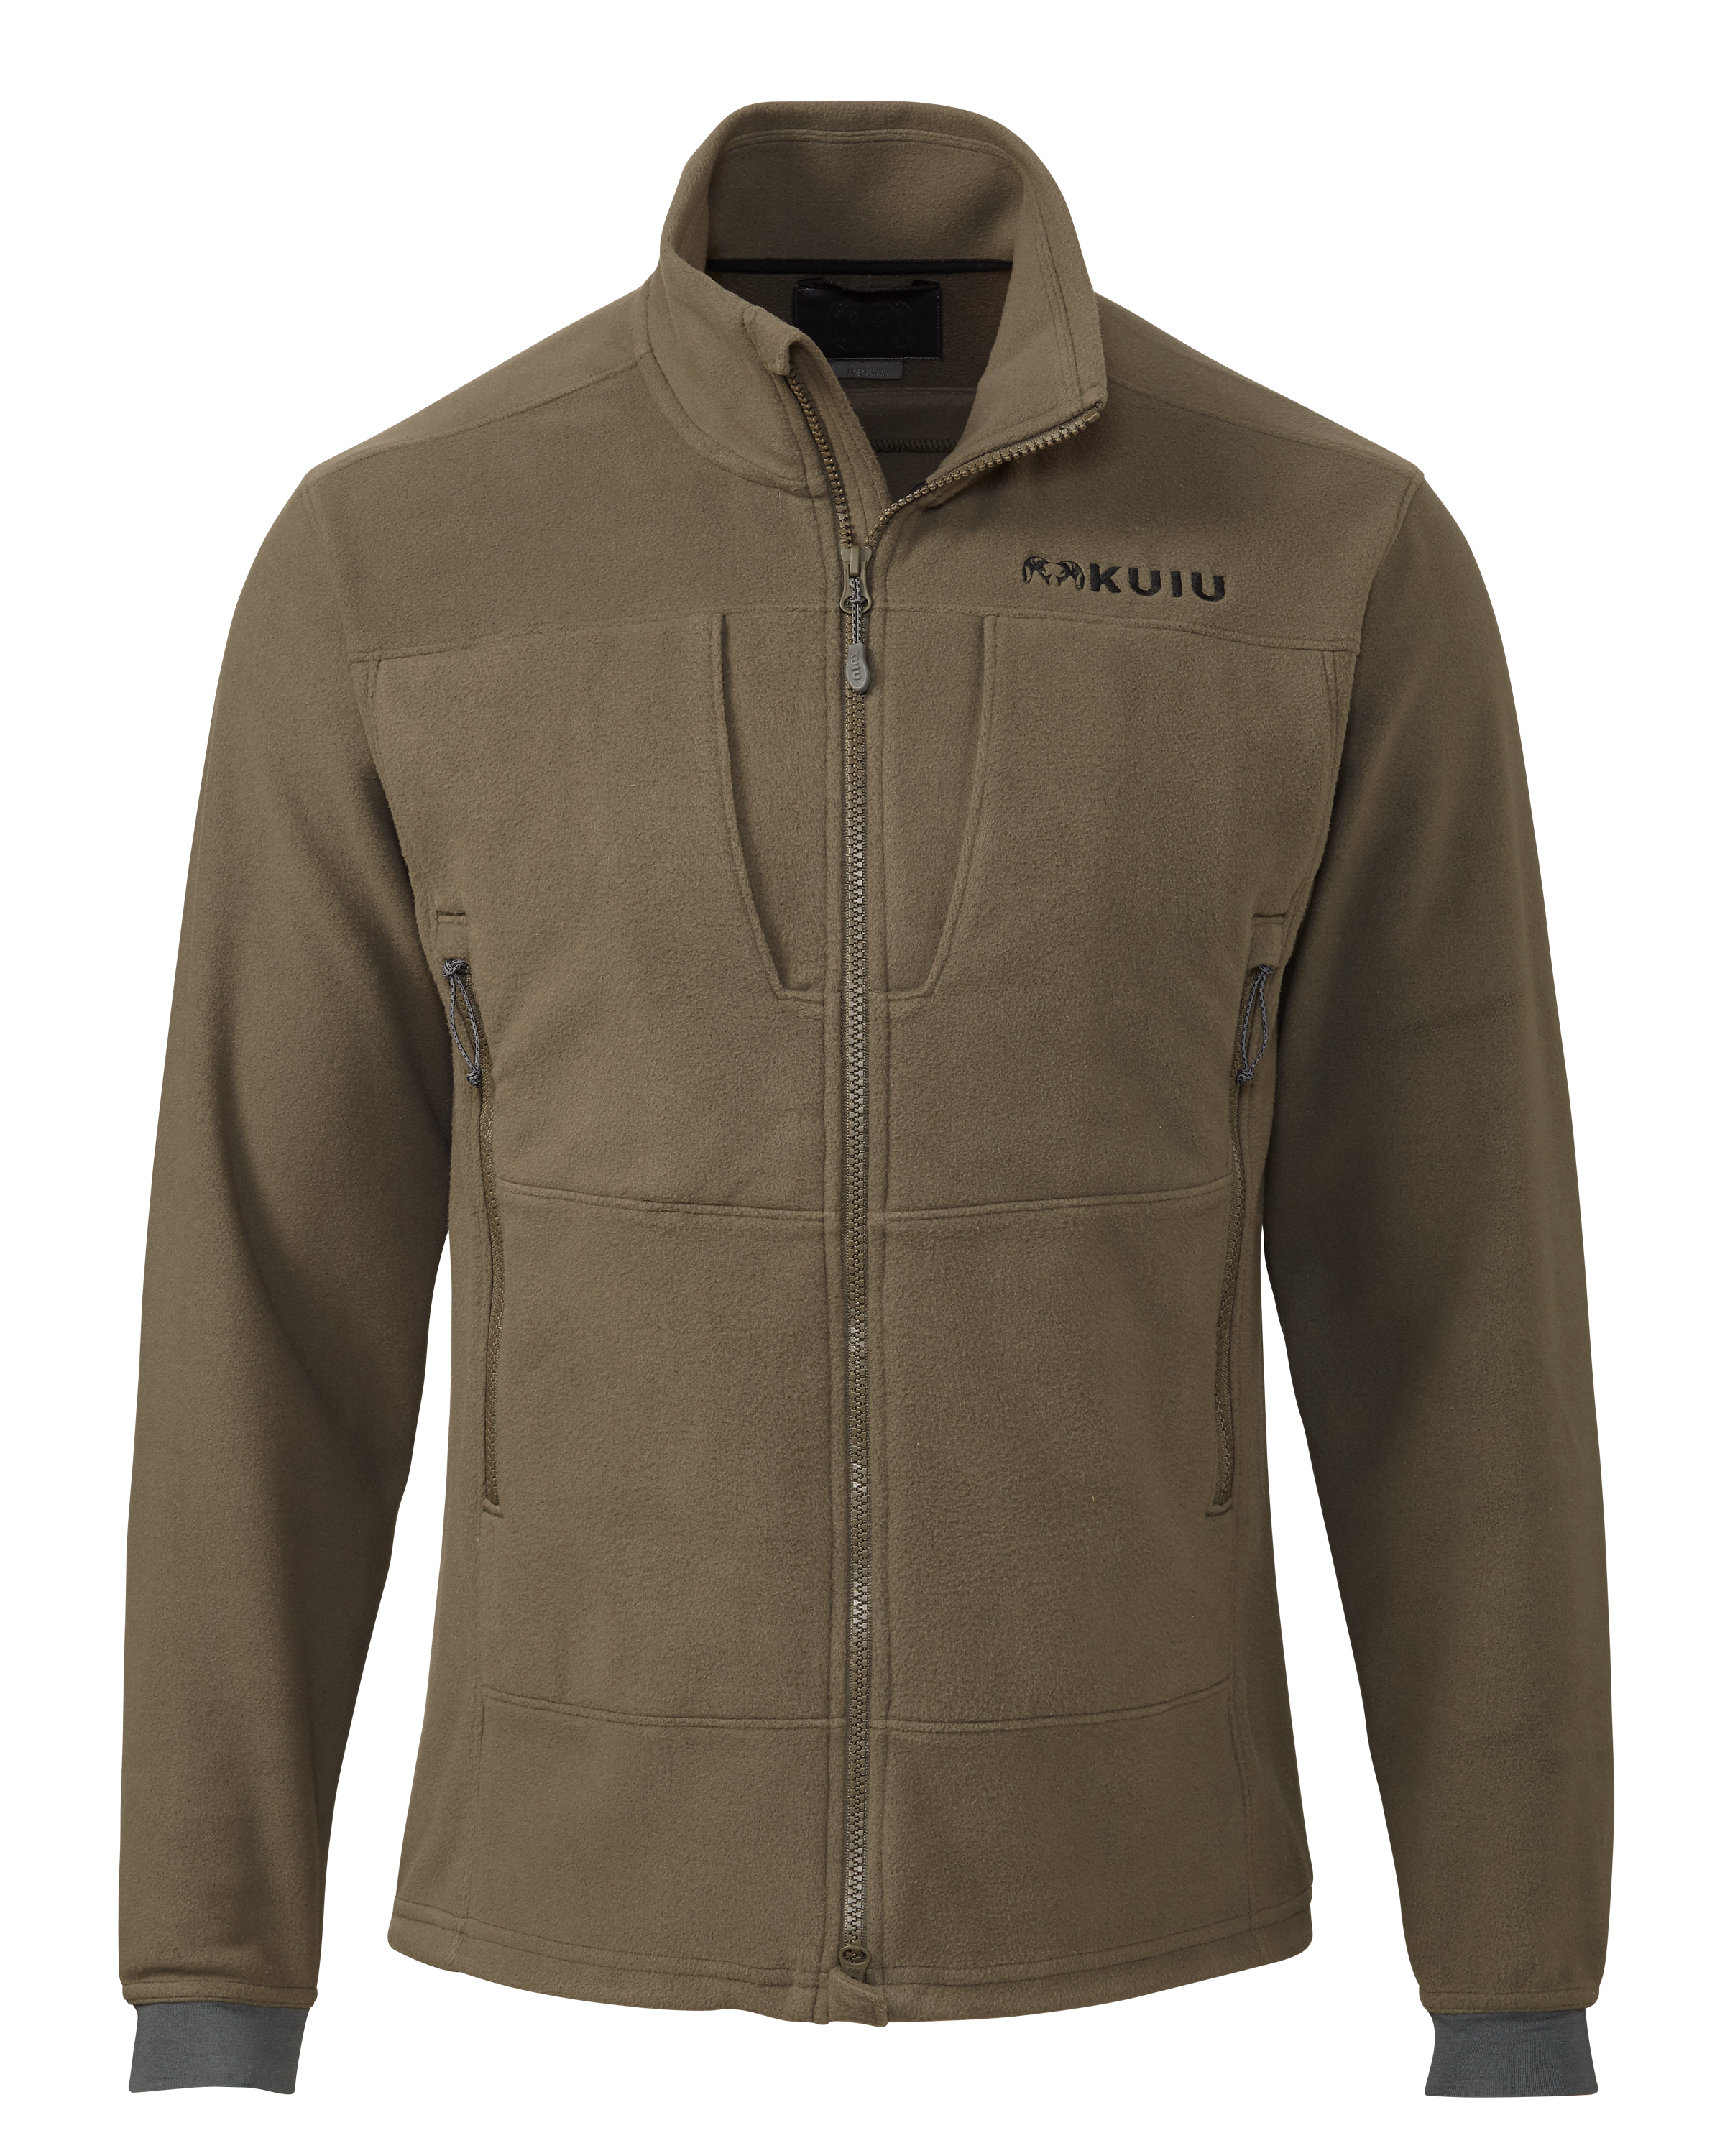 KUIU Wind Pro Fleece Full Zip Hunting Jacket in Ash | Large